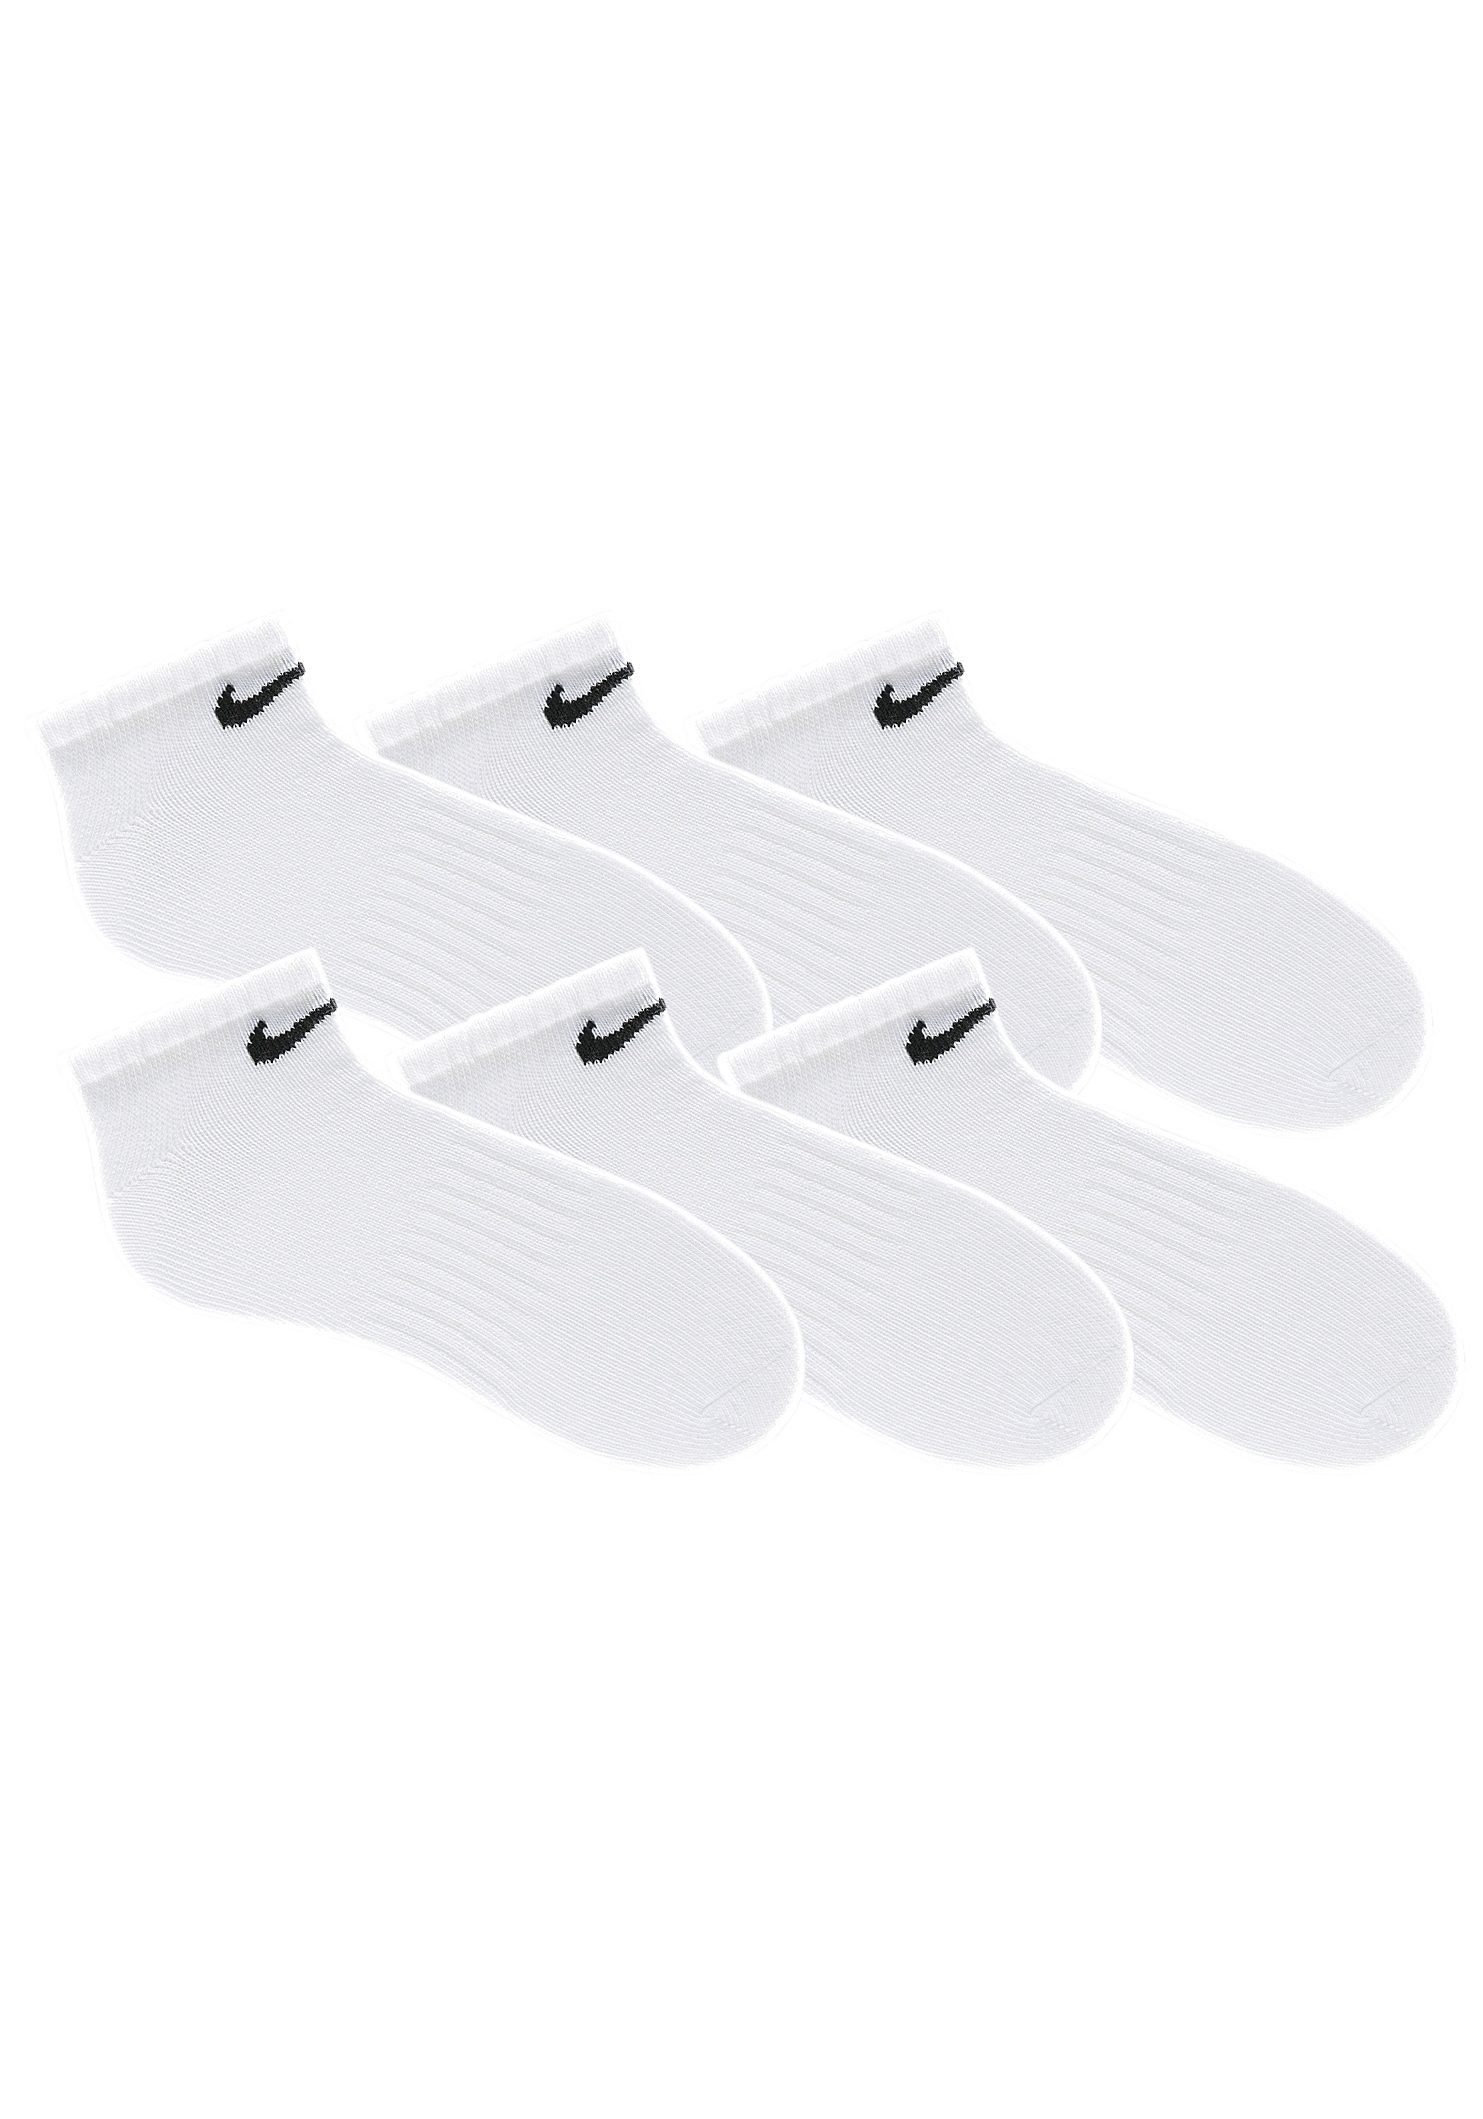 weiß (6-Paar) Sneakersocken Nike mit Mittelfußgummi